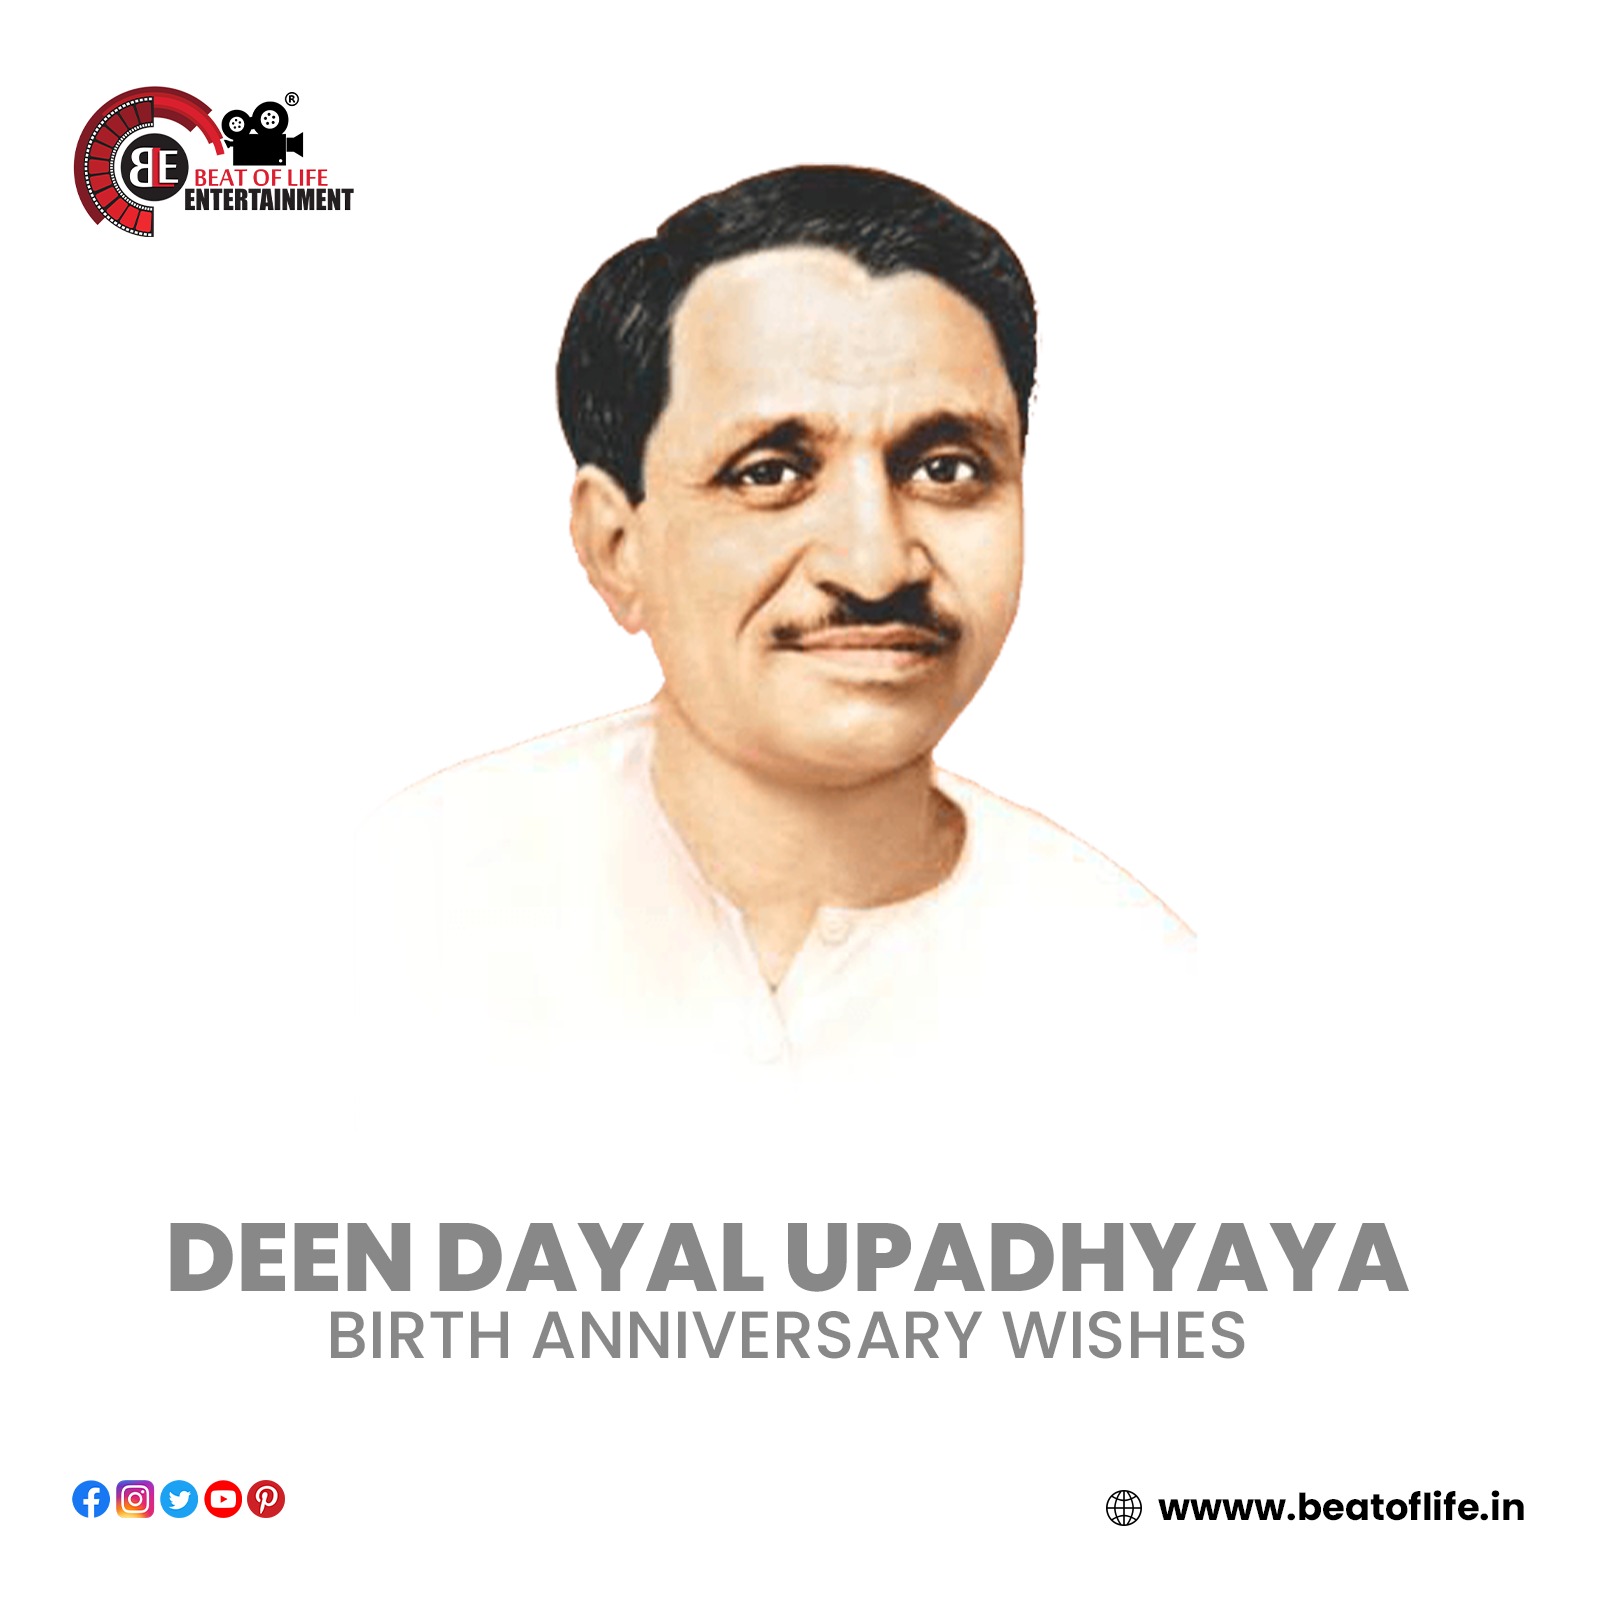 Deen Dayal Upadhyaya's Birth Anniversary wishes